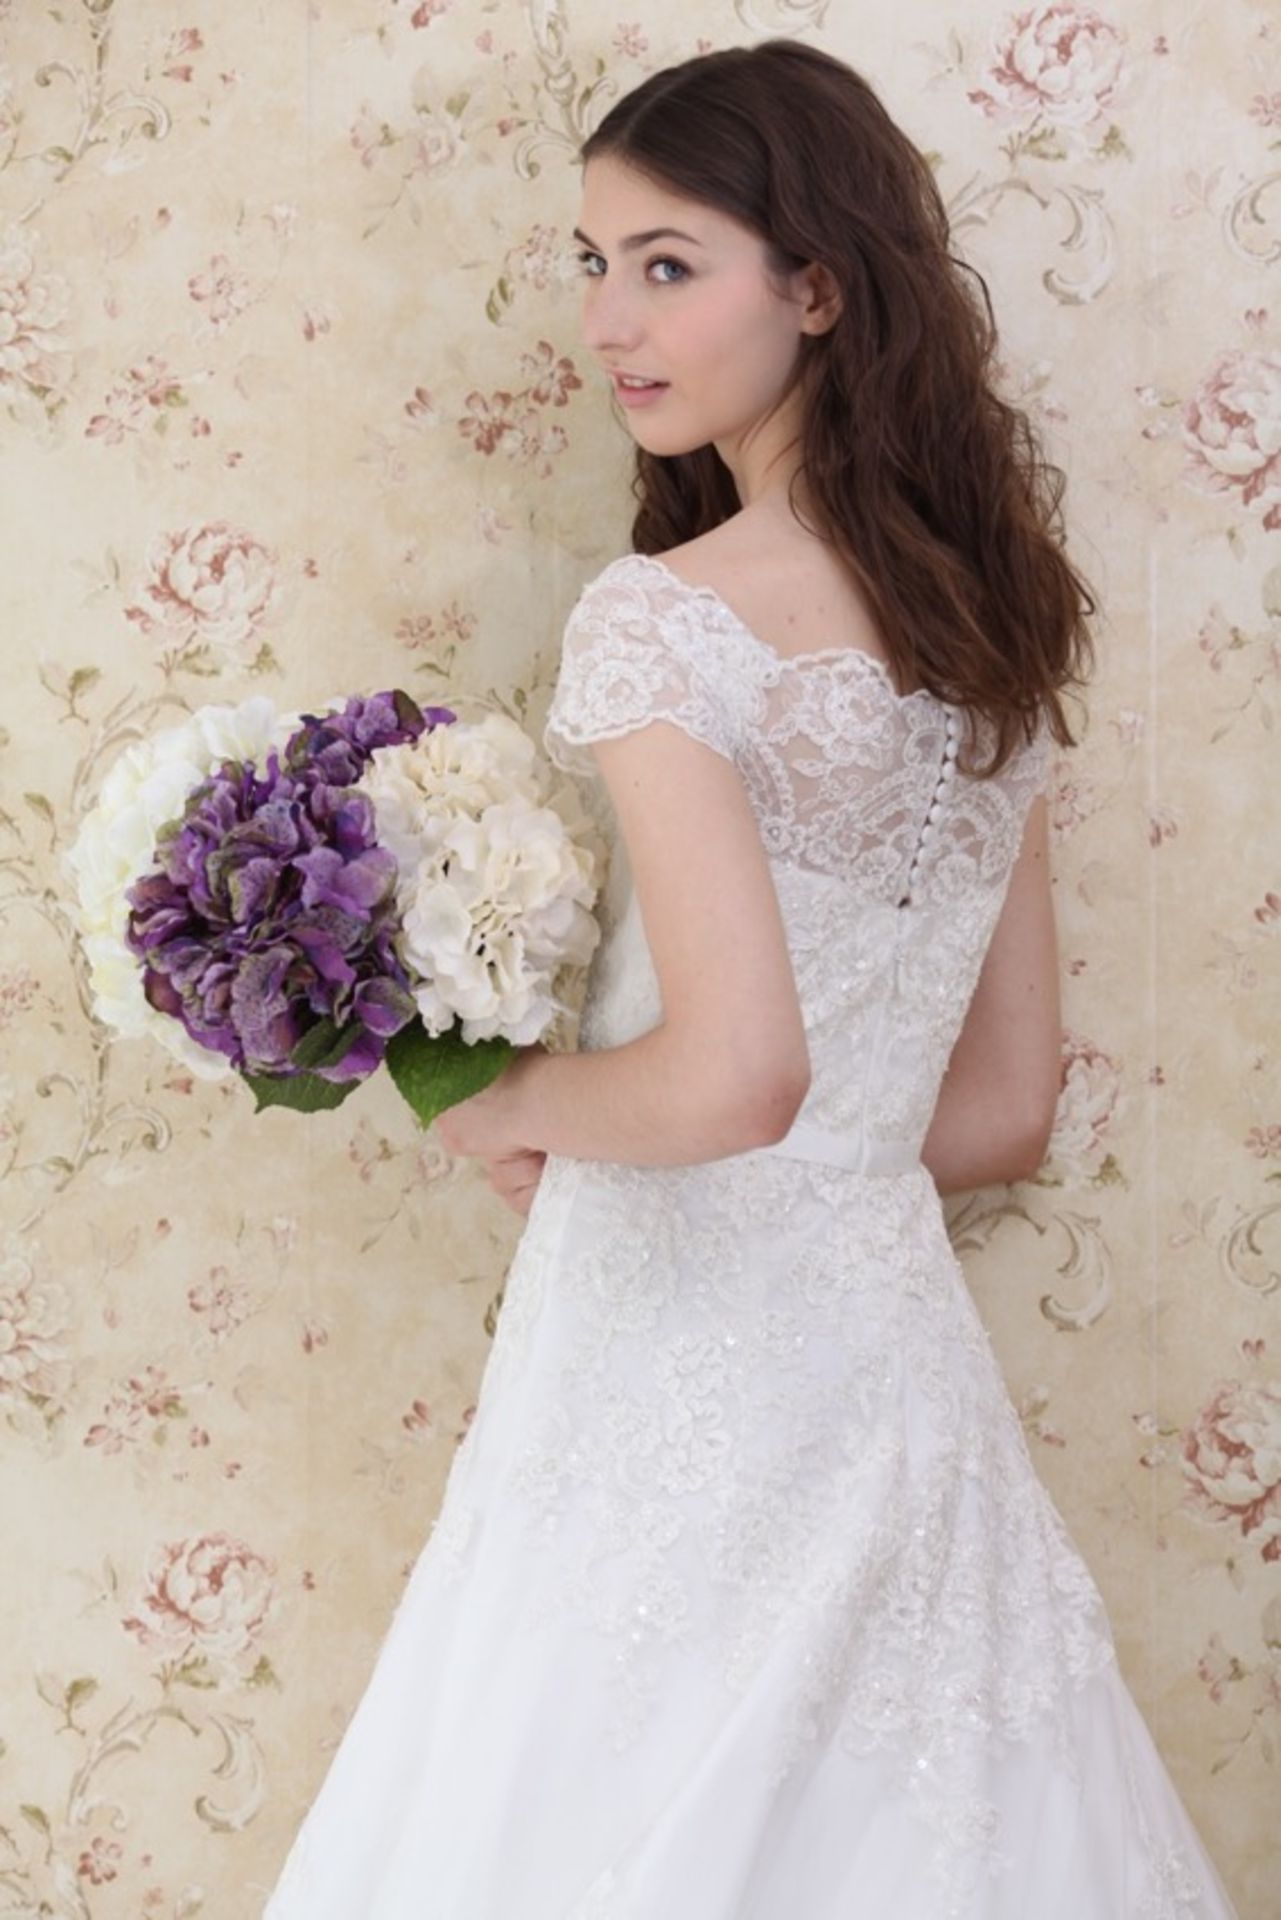 1 x ATELIER LYANNA Designer Wedding Dress Bridal Gown - Size: UK 12 - Original RRP £1,600 - Image 2 of 14